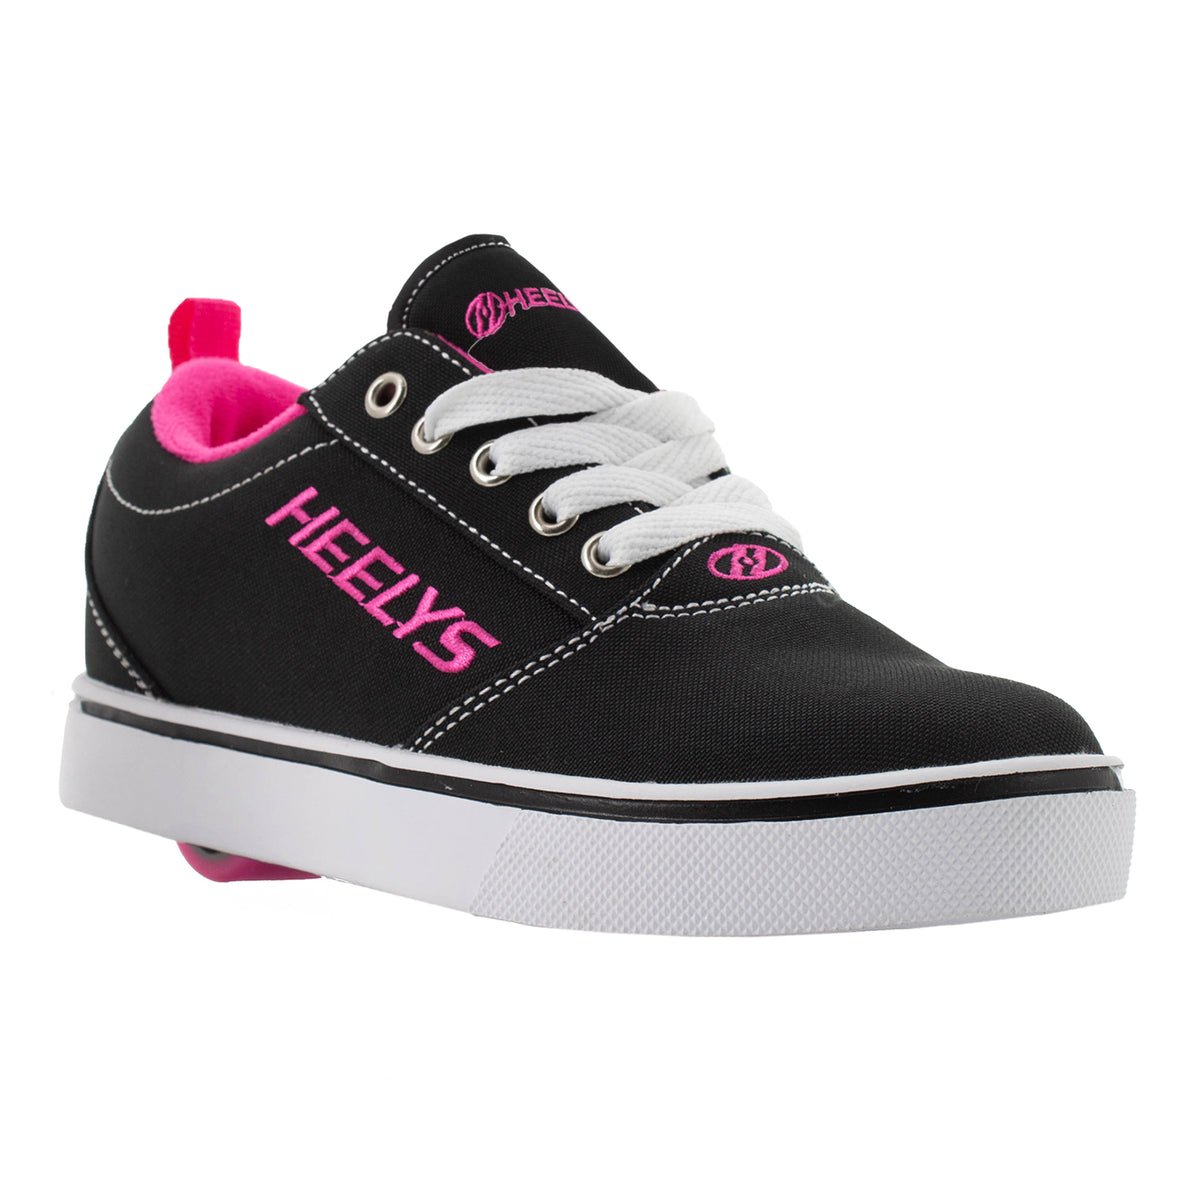 HEELYS Unisex Kids' Pro 20 Wheeled Shoe Black/White/Pink - HE100760H BLACK/WHITE/PINK - BLACK/WHITE/PINK, 5 M US Big Kid